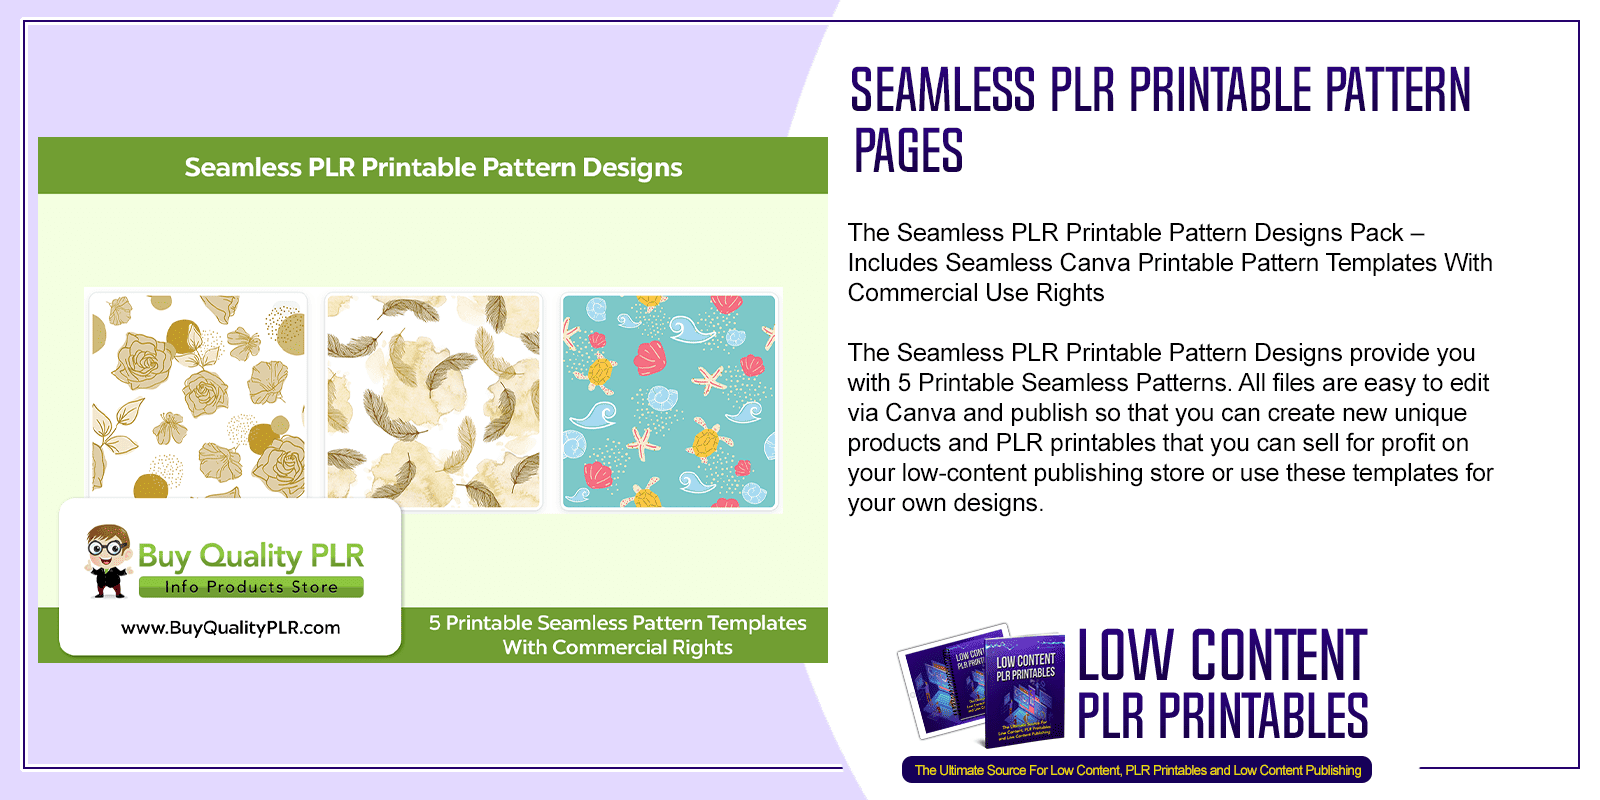 Seamless PLR Printable Pattern Designs